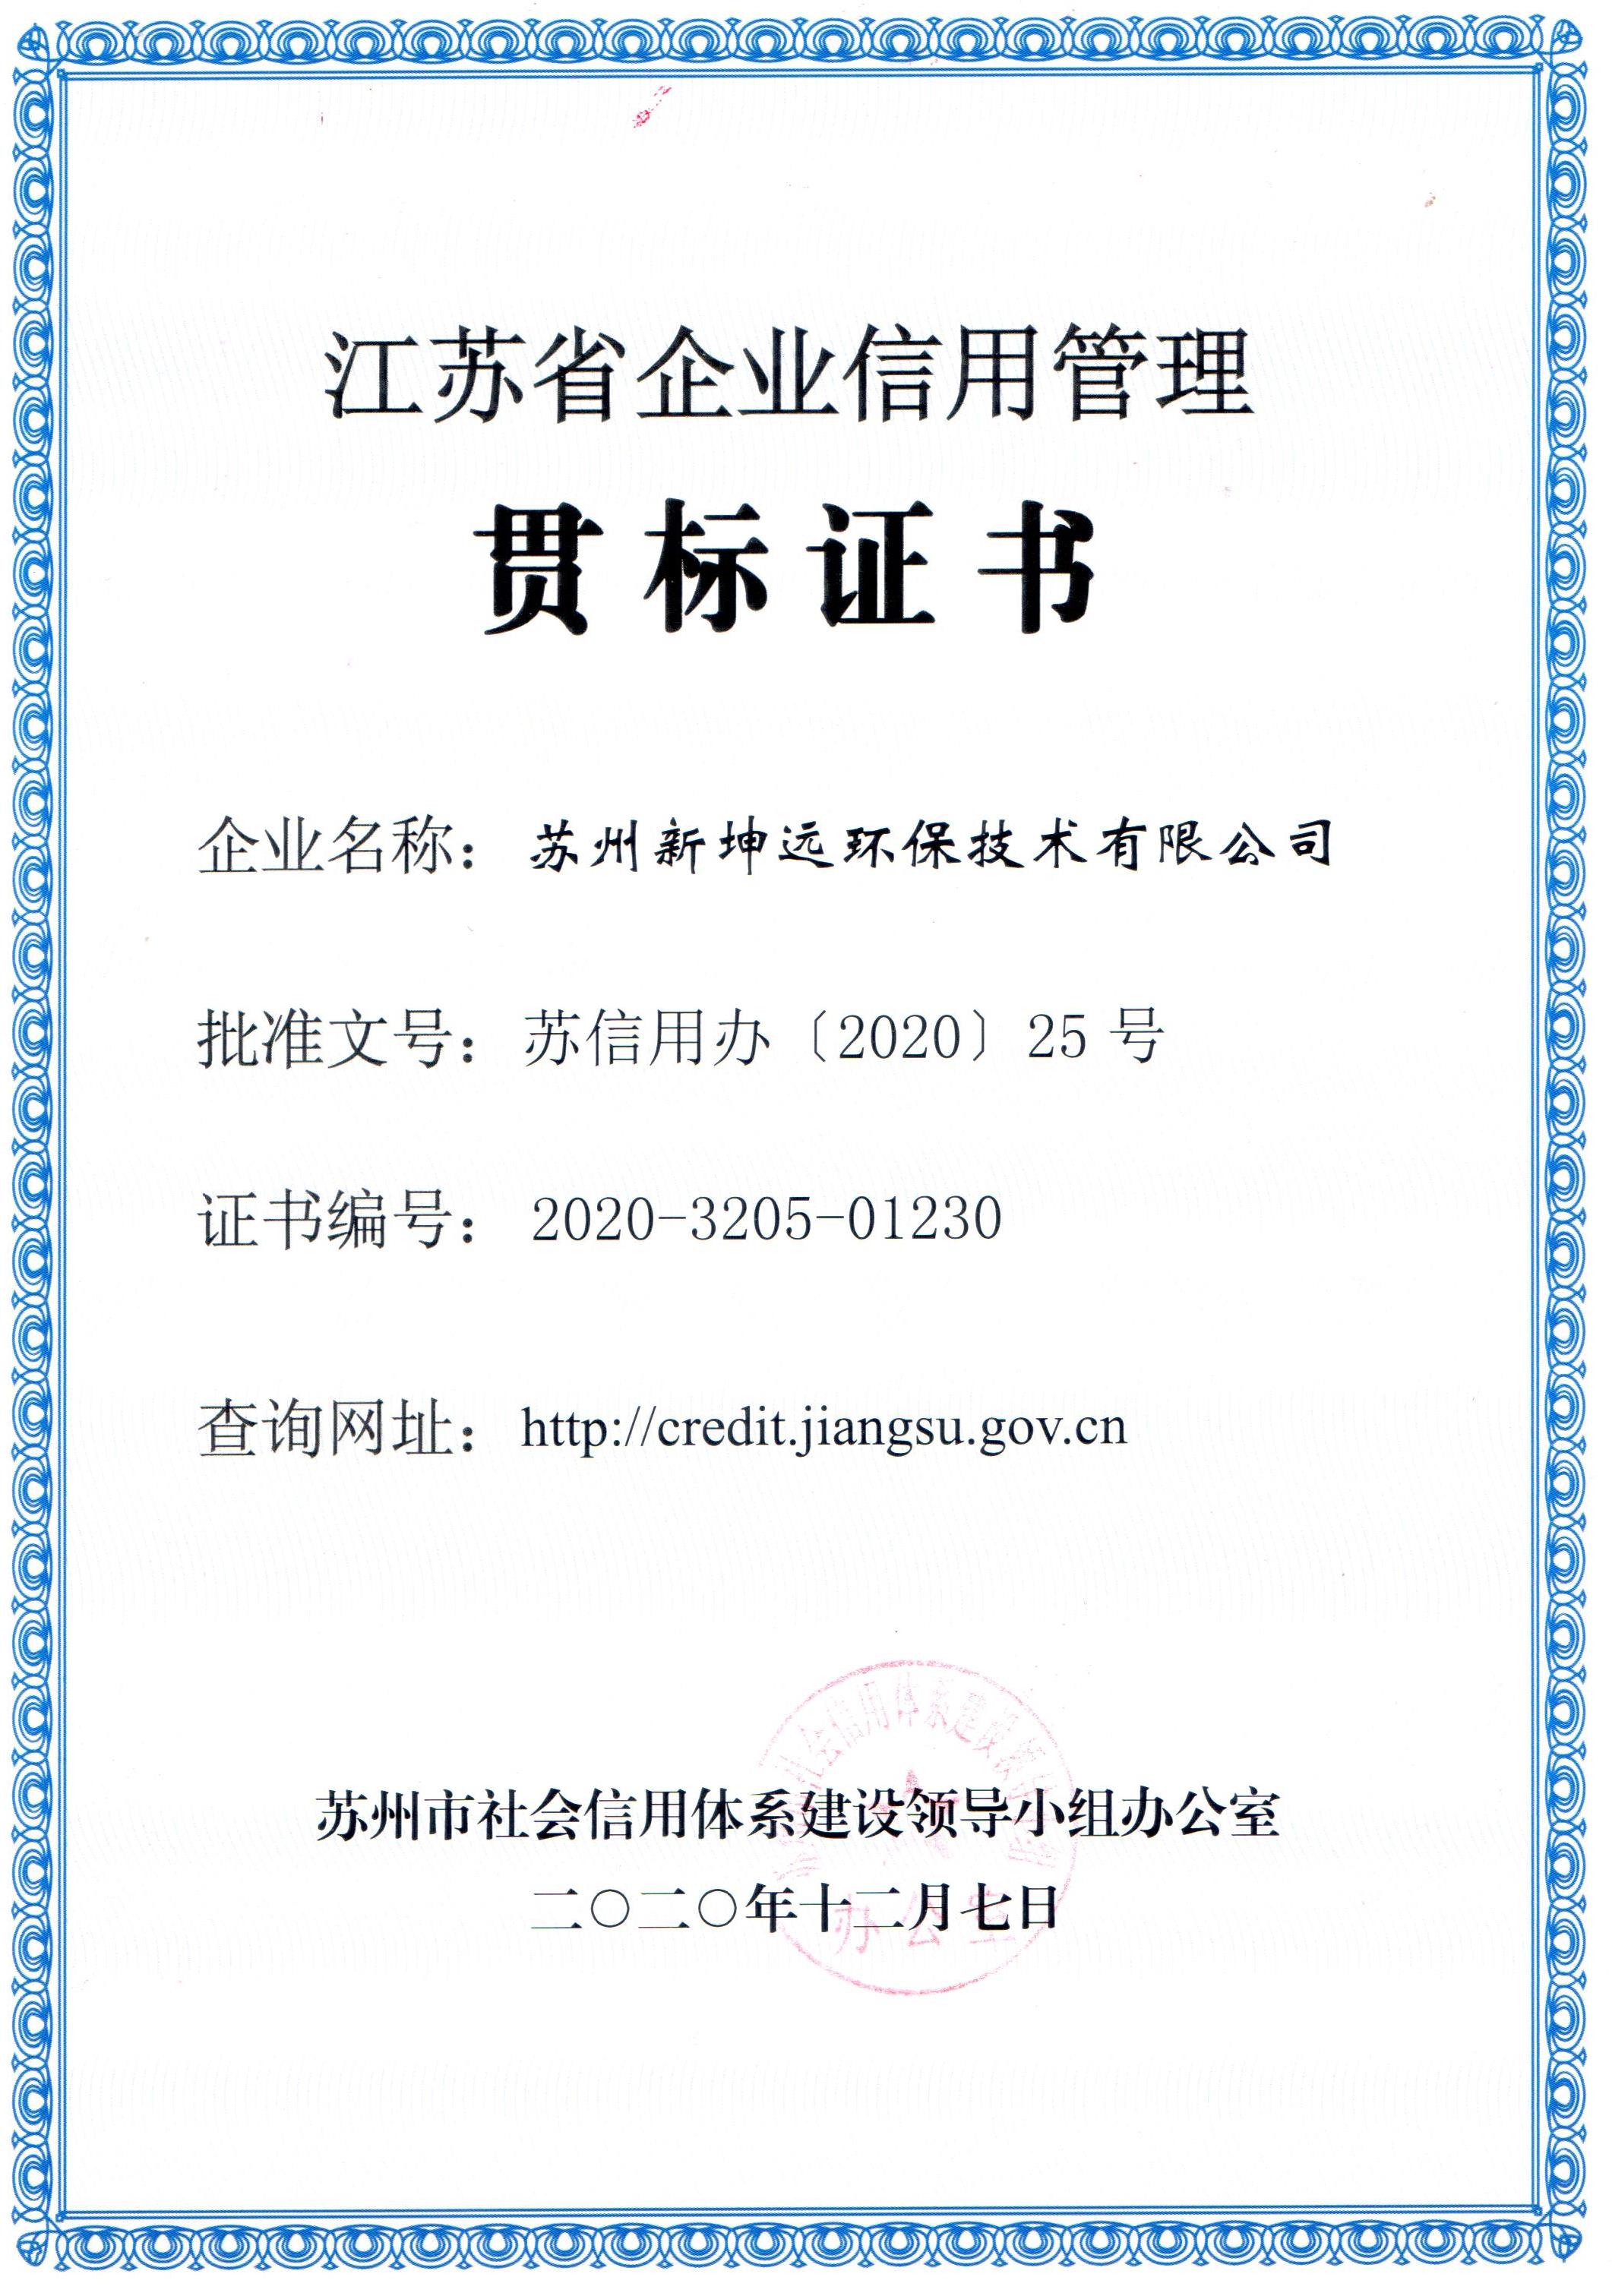 NGE-江苏省企业信用管理贯标证书